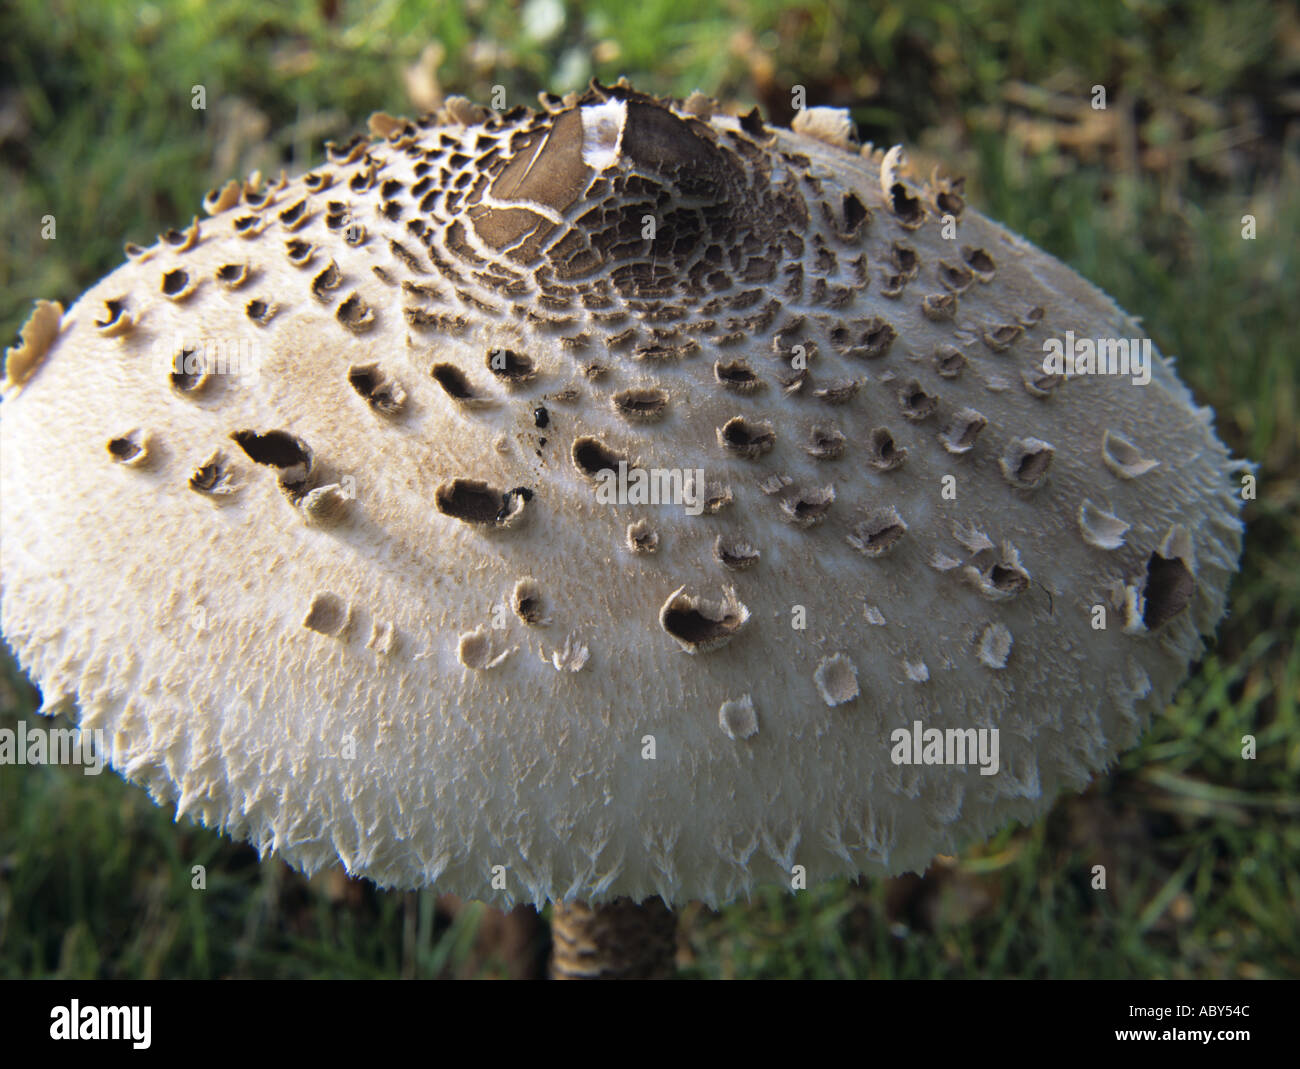 STUDIO STILL LIFE CONCEPT ABSTRACT Image of a Parasol Mushroom Macrolepiota procera Stock Photo